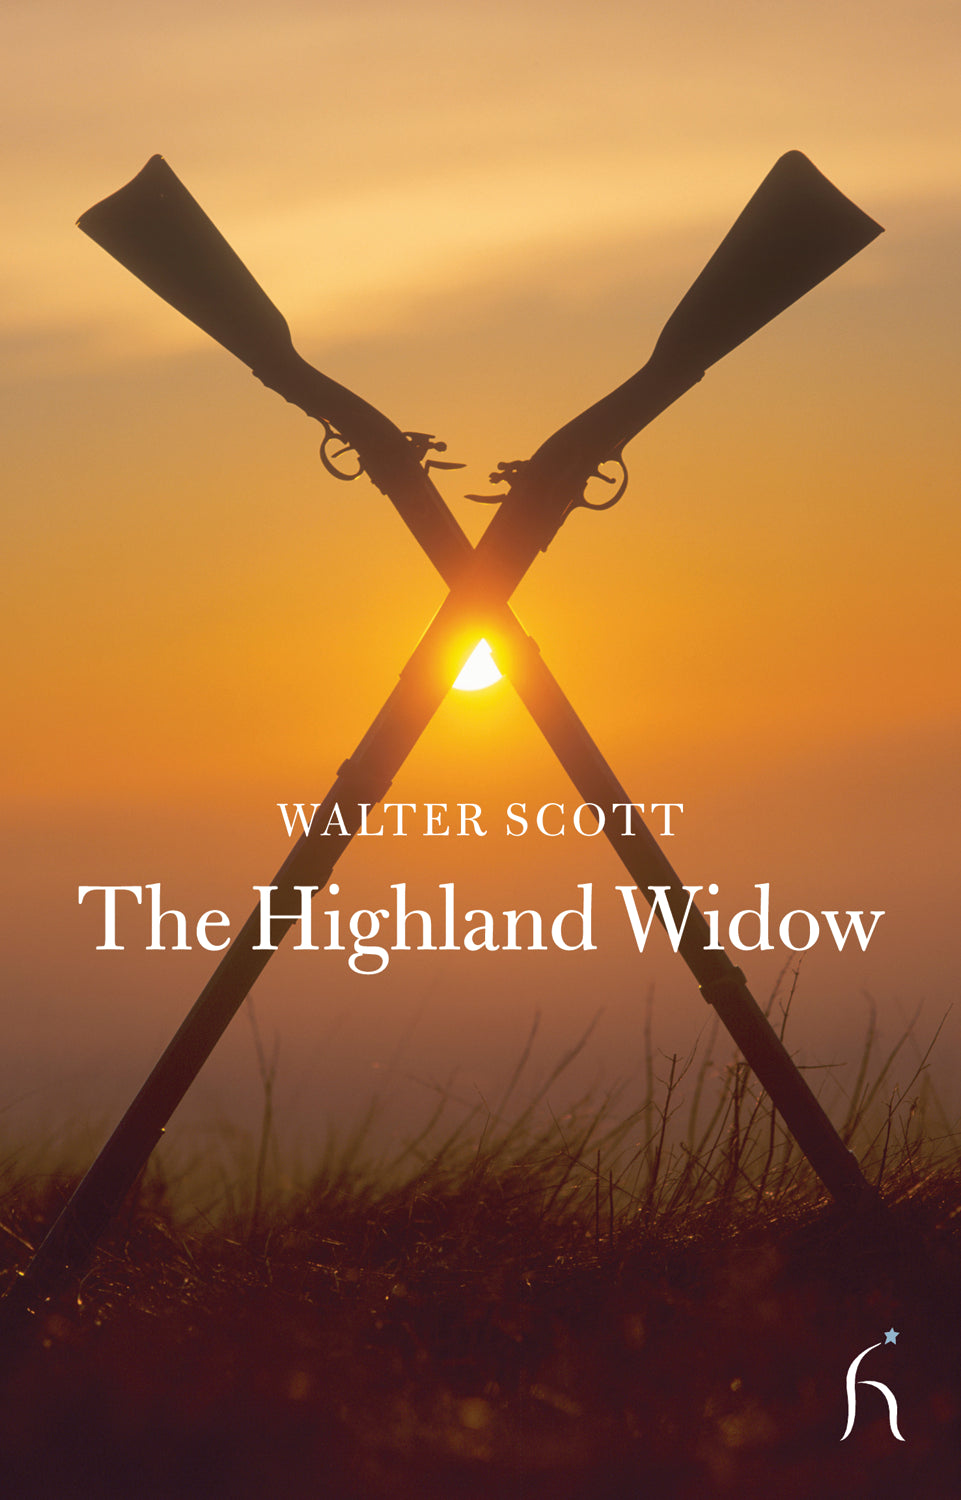 THE HIGHLAND WIDOW